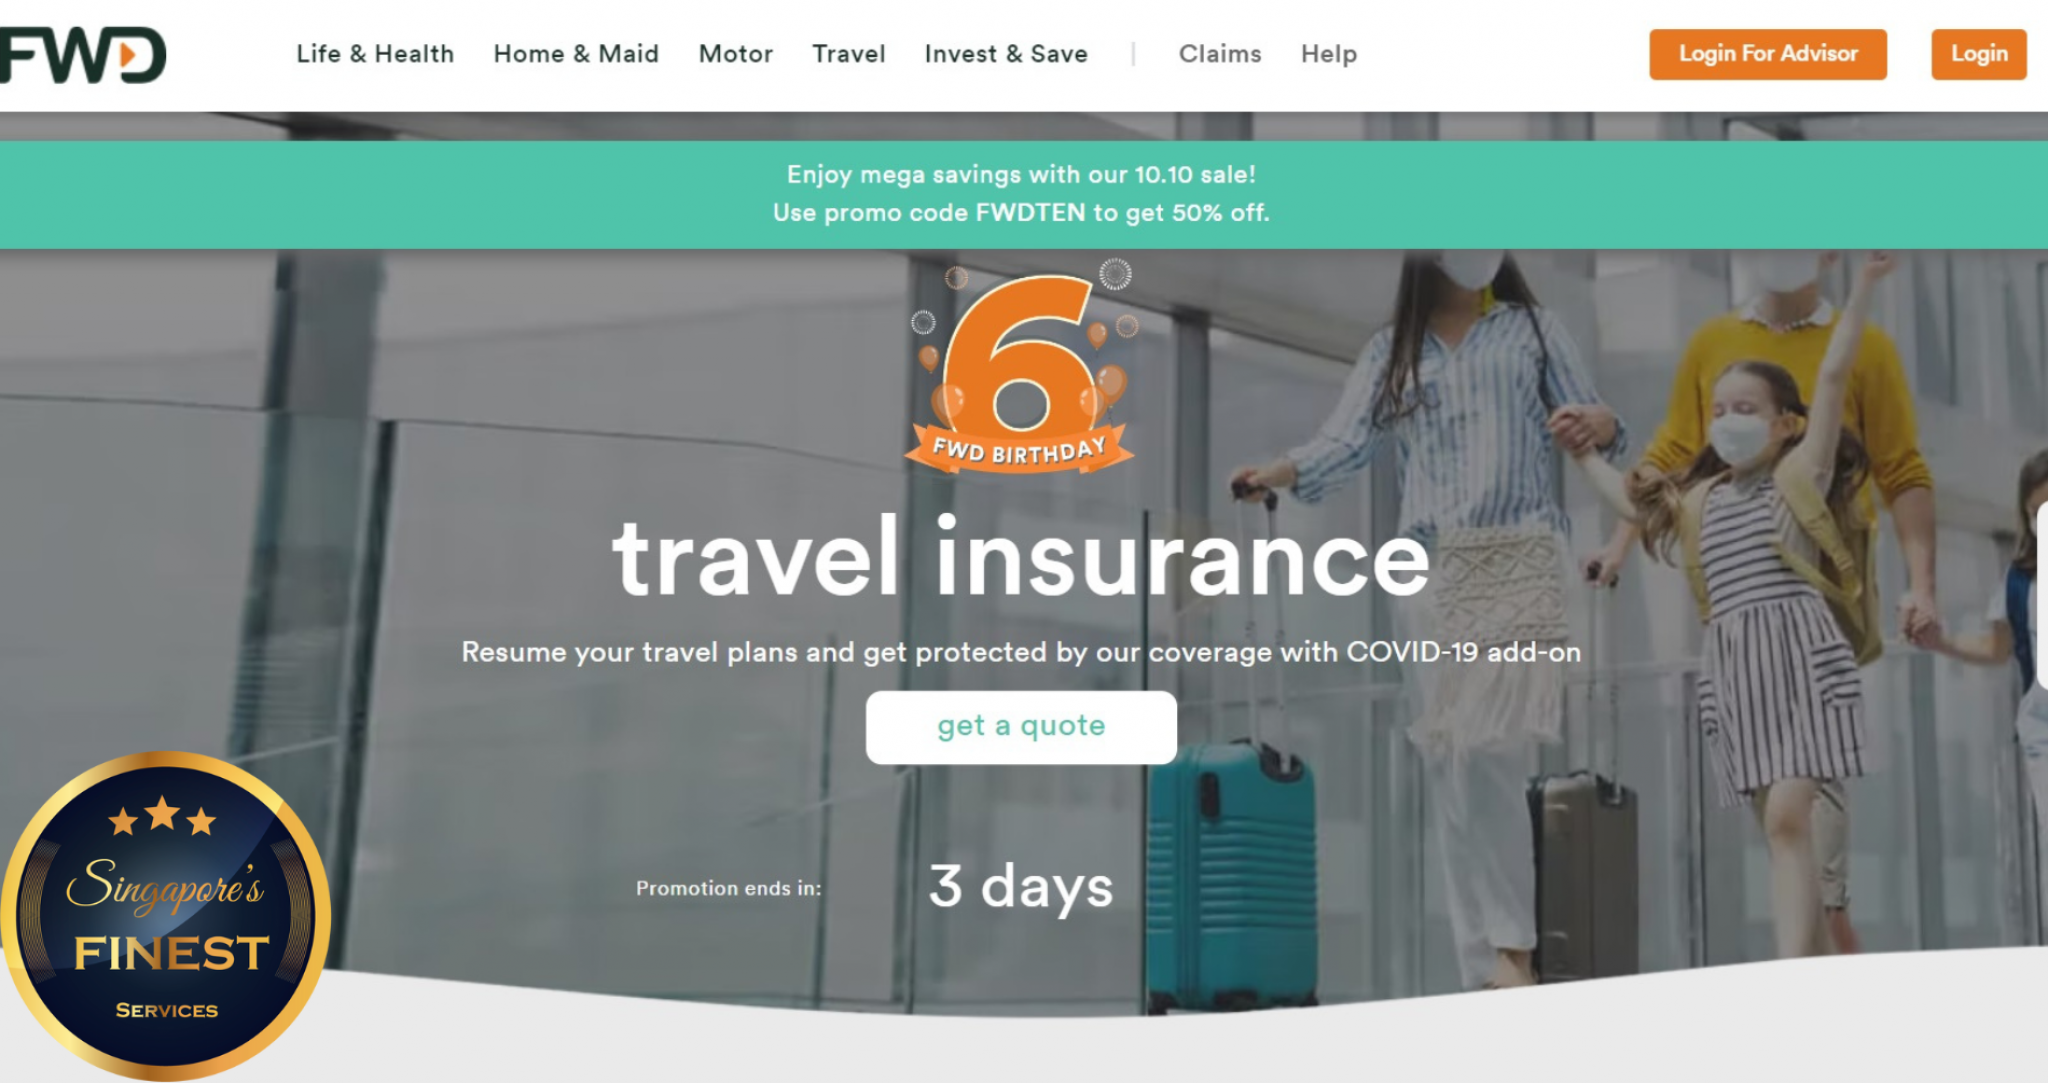 singapore travel insurance 2022